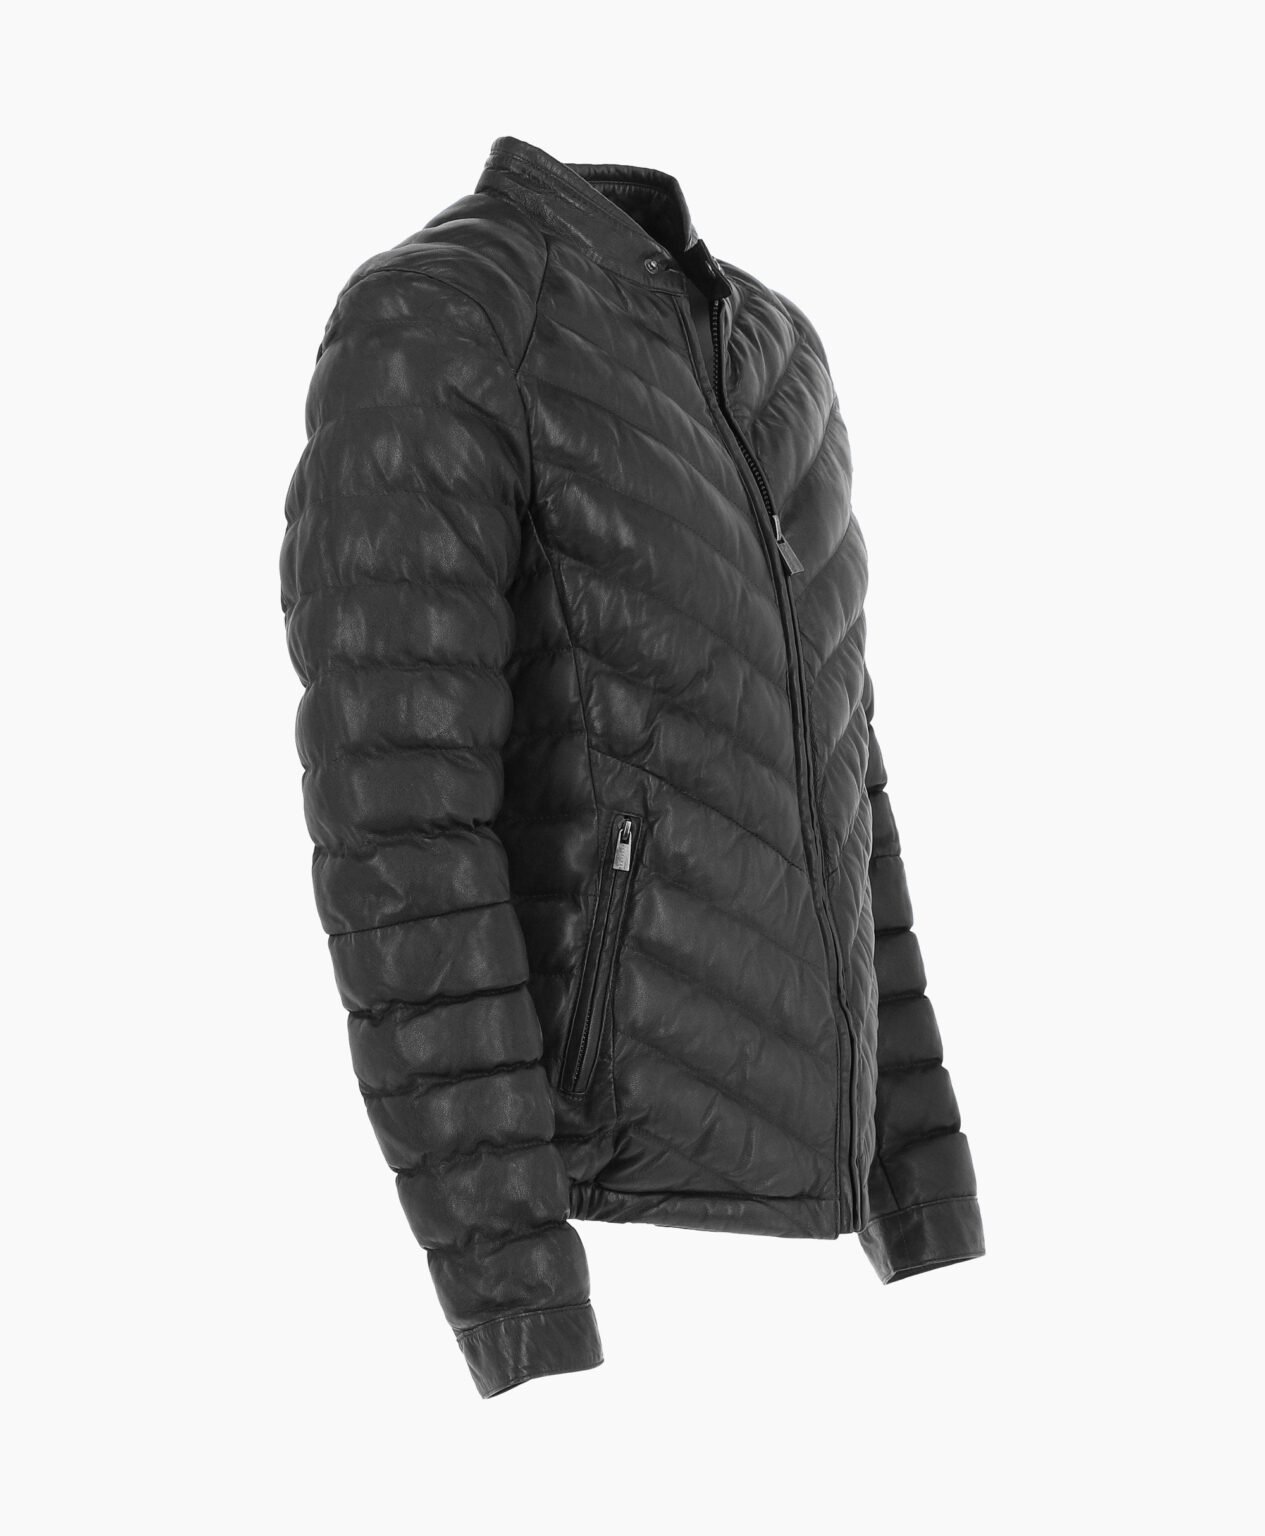 vogue-jacket-leather-puffer-jacket-black-prescott-image203